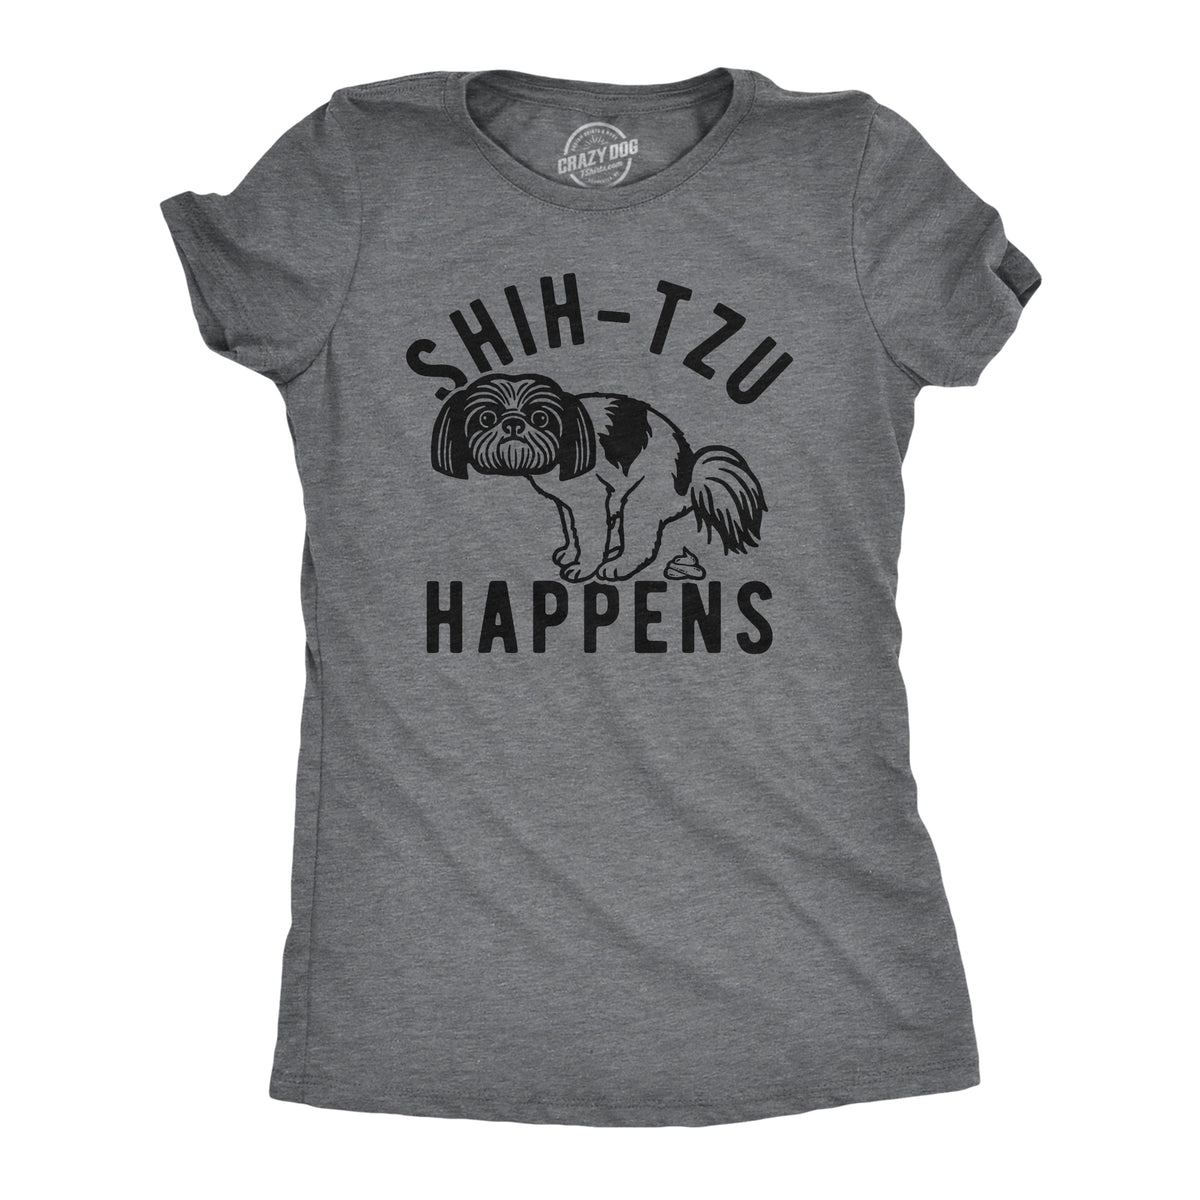 Funny Dark Heather Grey - SHIHTZU Shih Tzu Happens Womens T Shirt Nerdy Dog Sarcastic Tee